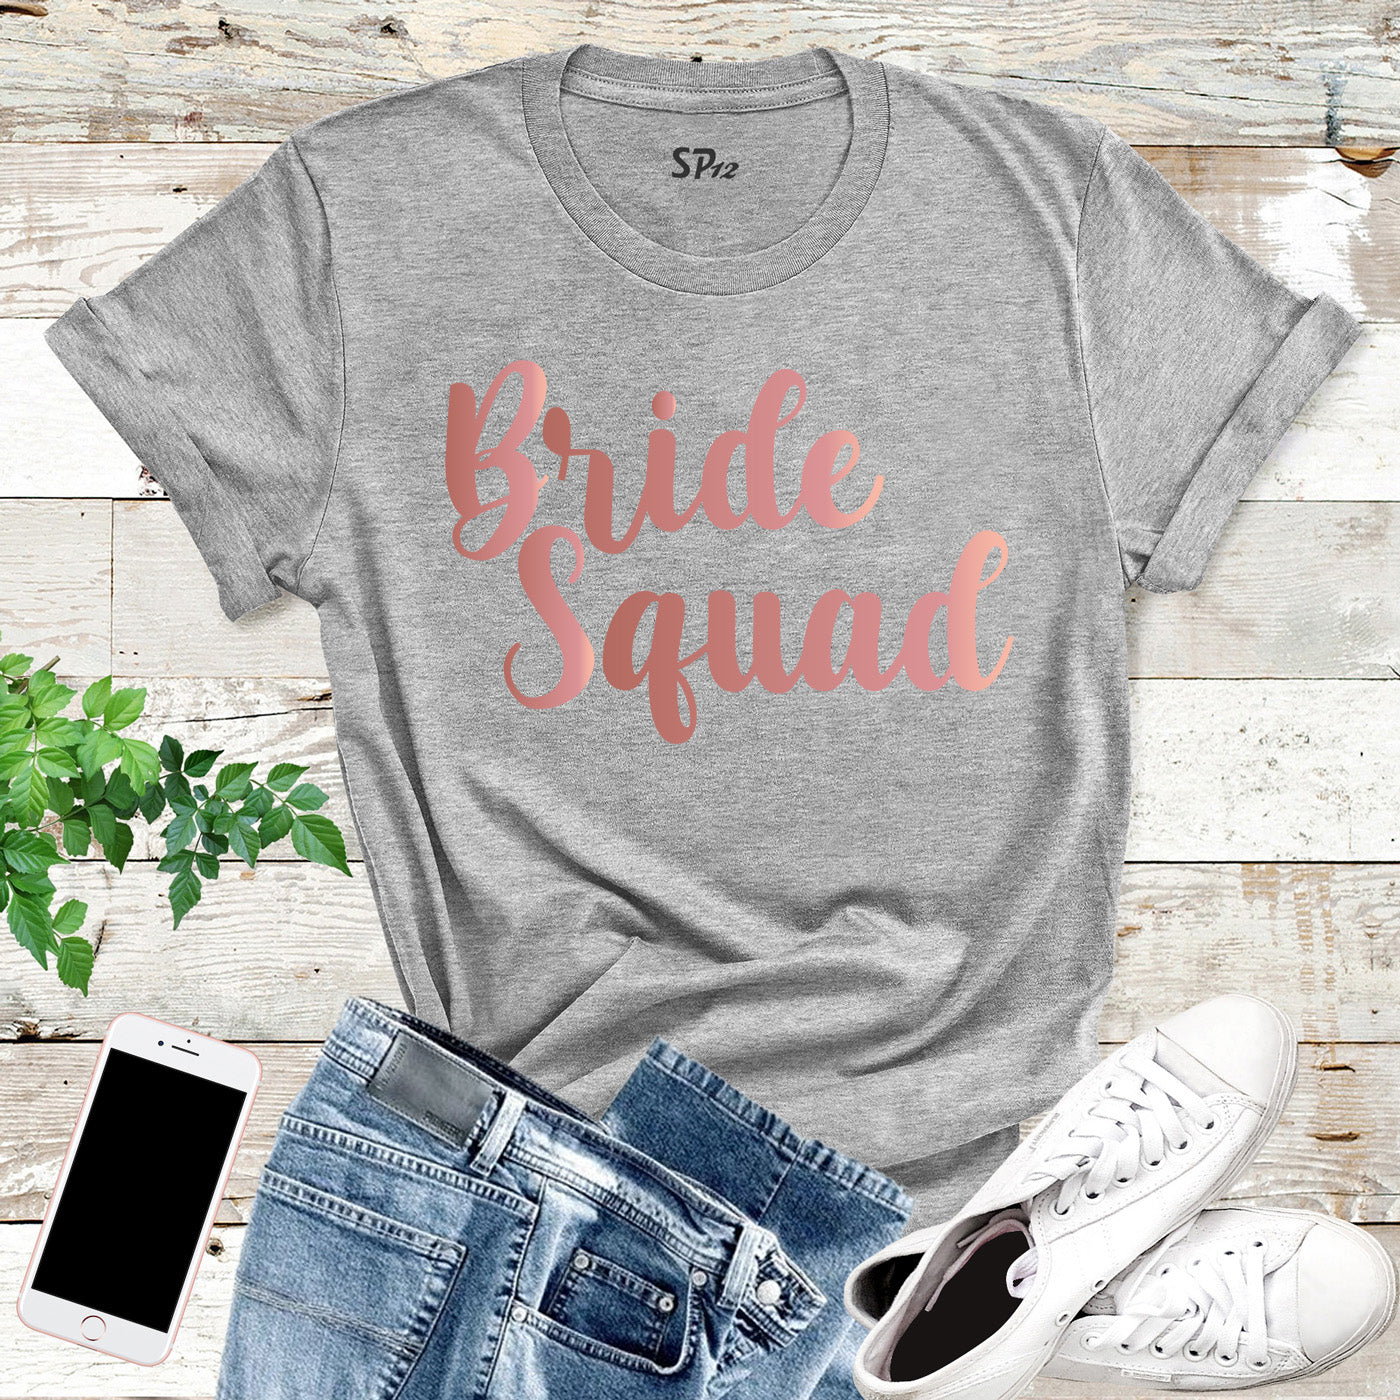 Bride Squad T Shirts Bachelorette Party Hen Party Bridesmaid Wedding Party Tshirt